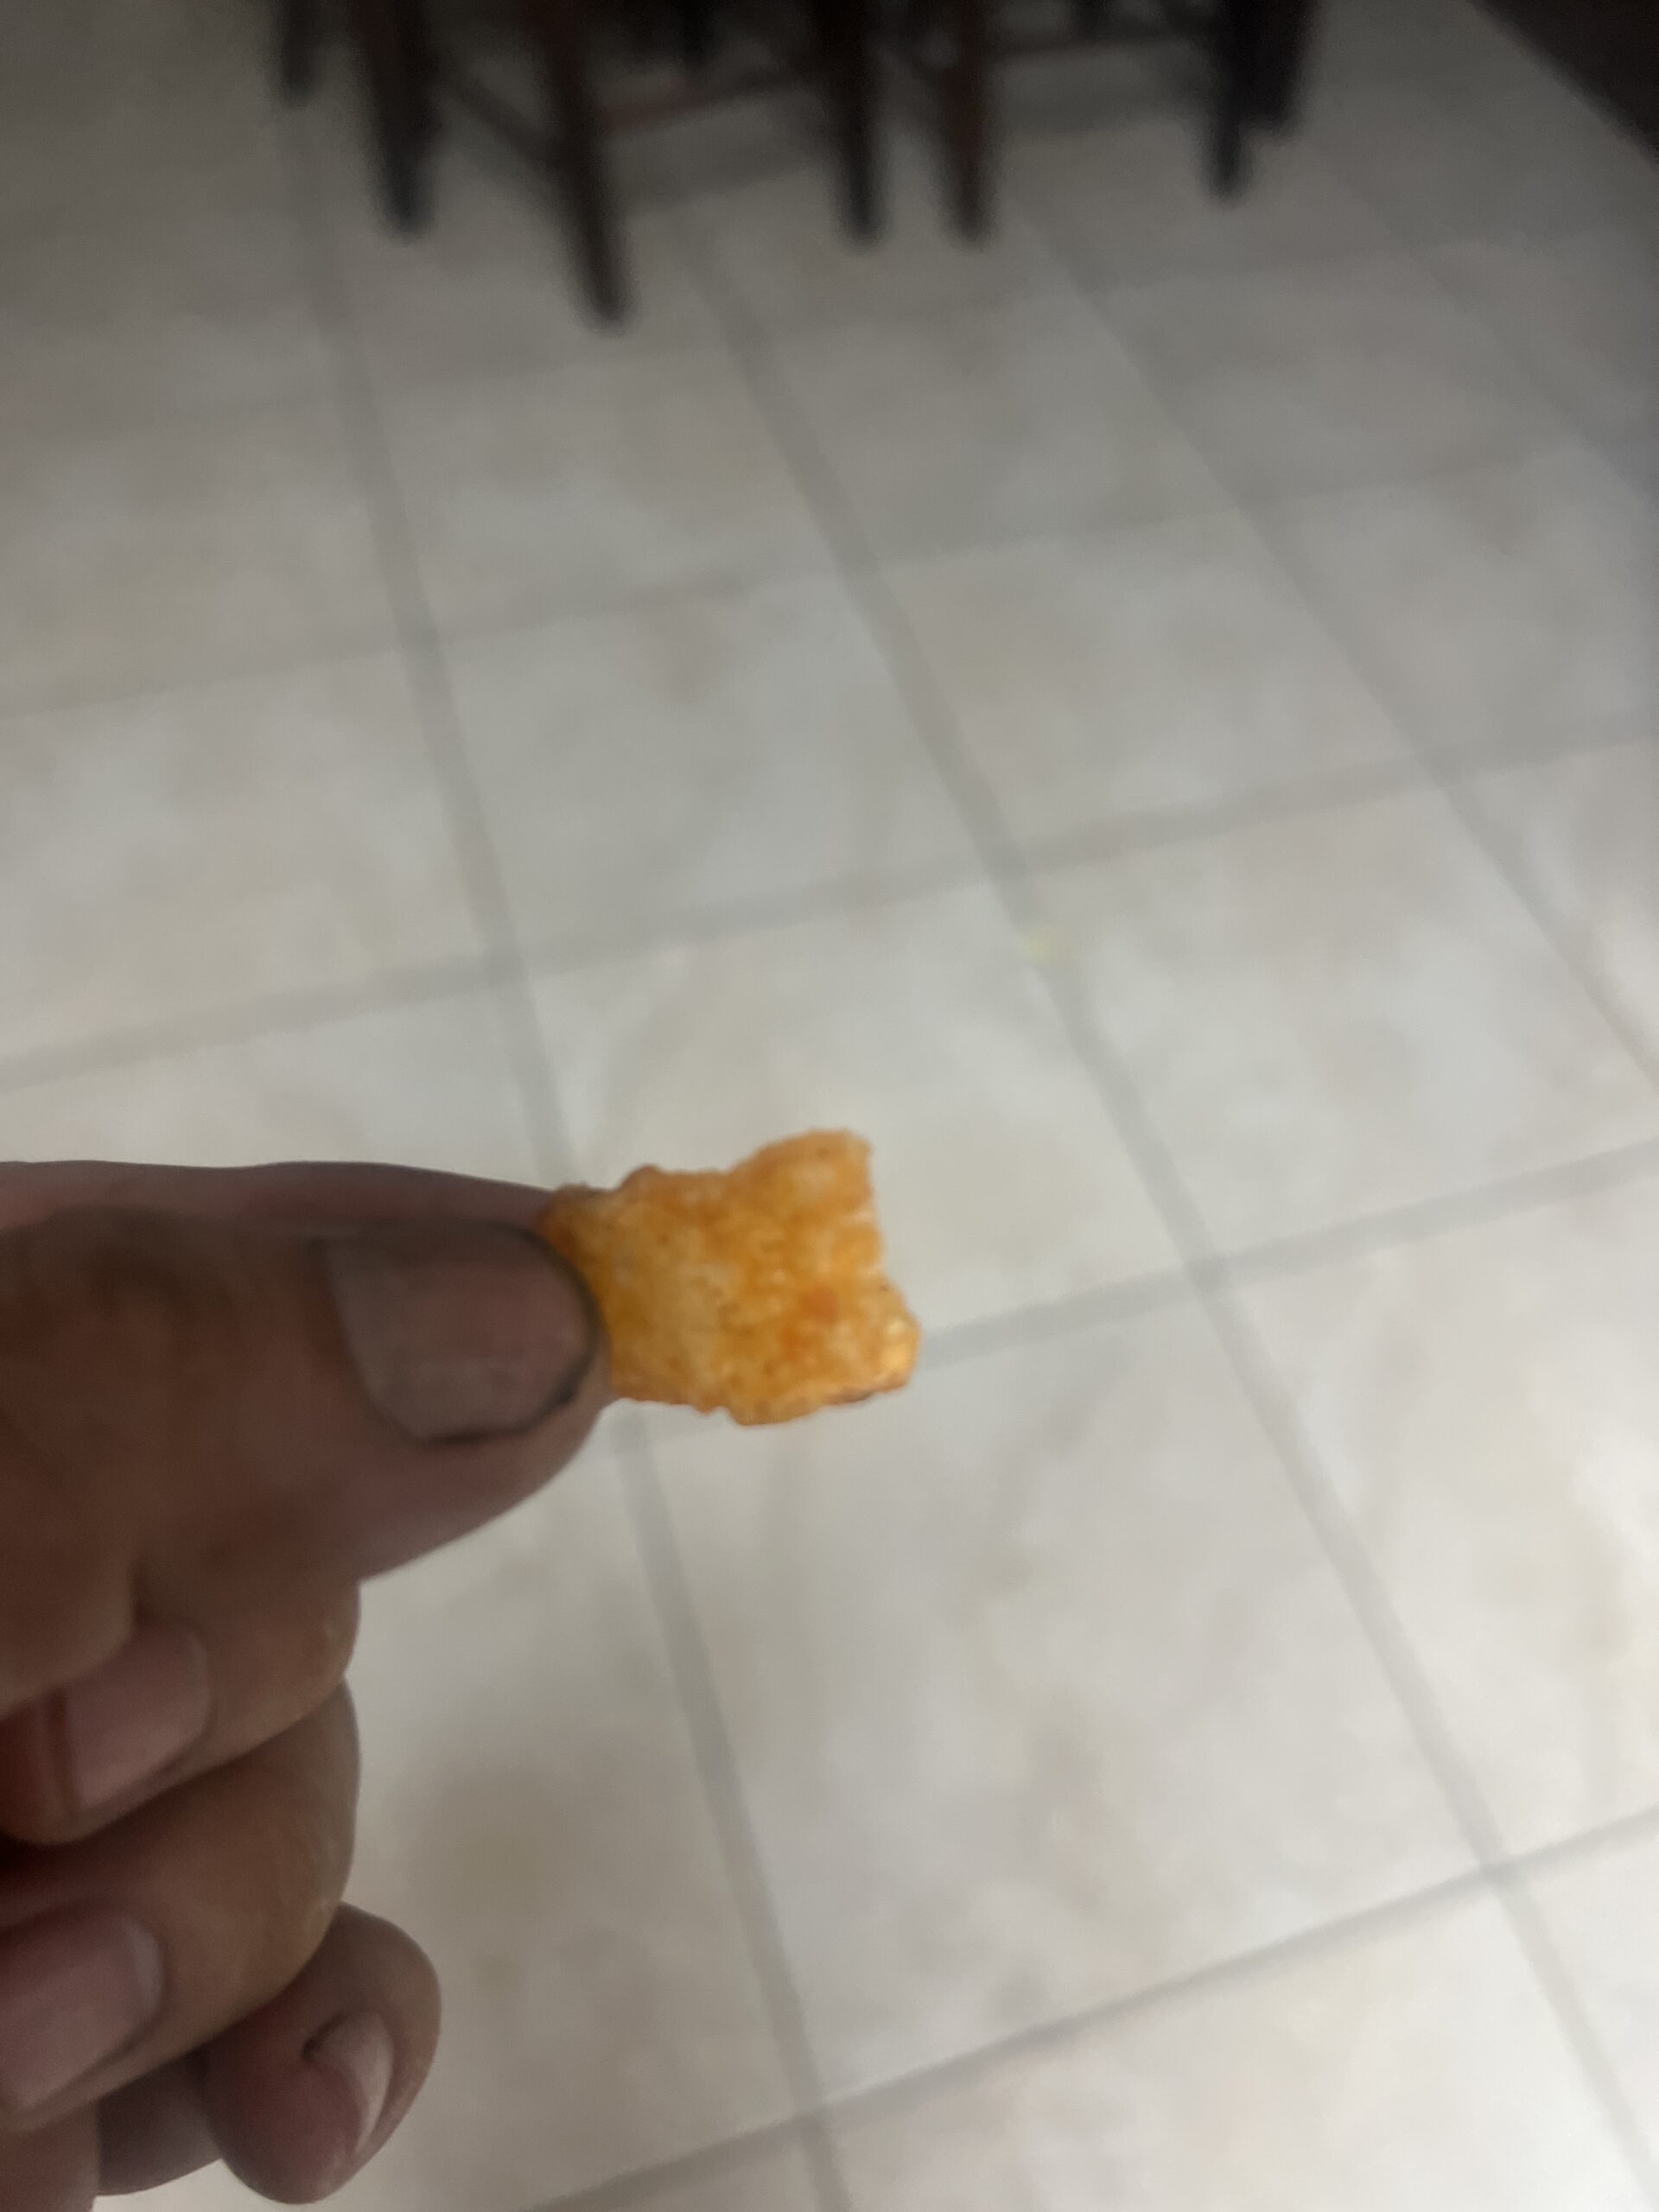 Doritos complaint Hard ass chip